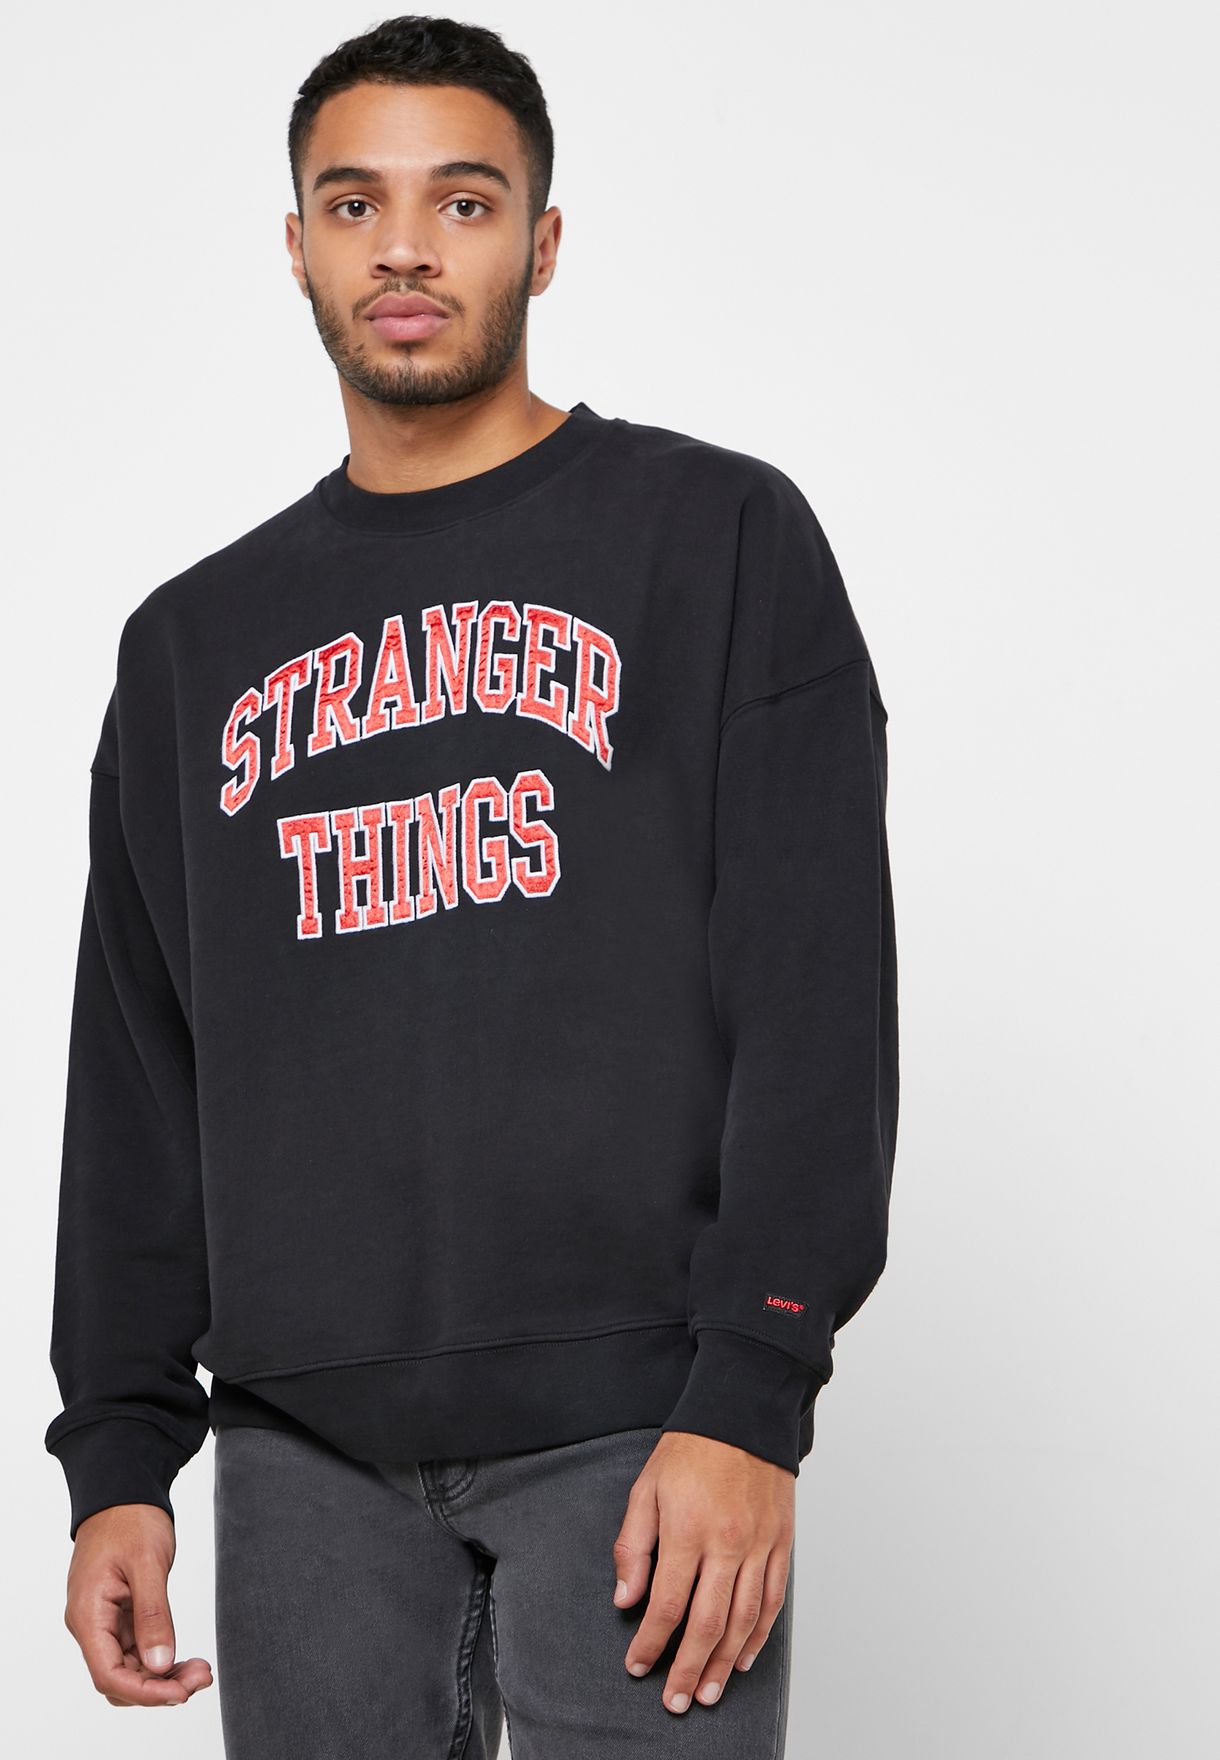 stranger things sweatshirt levis